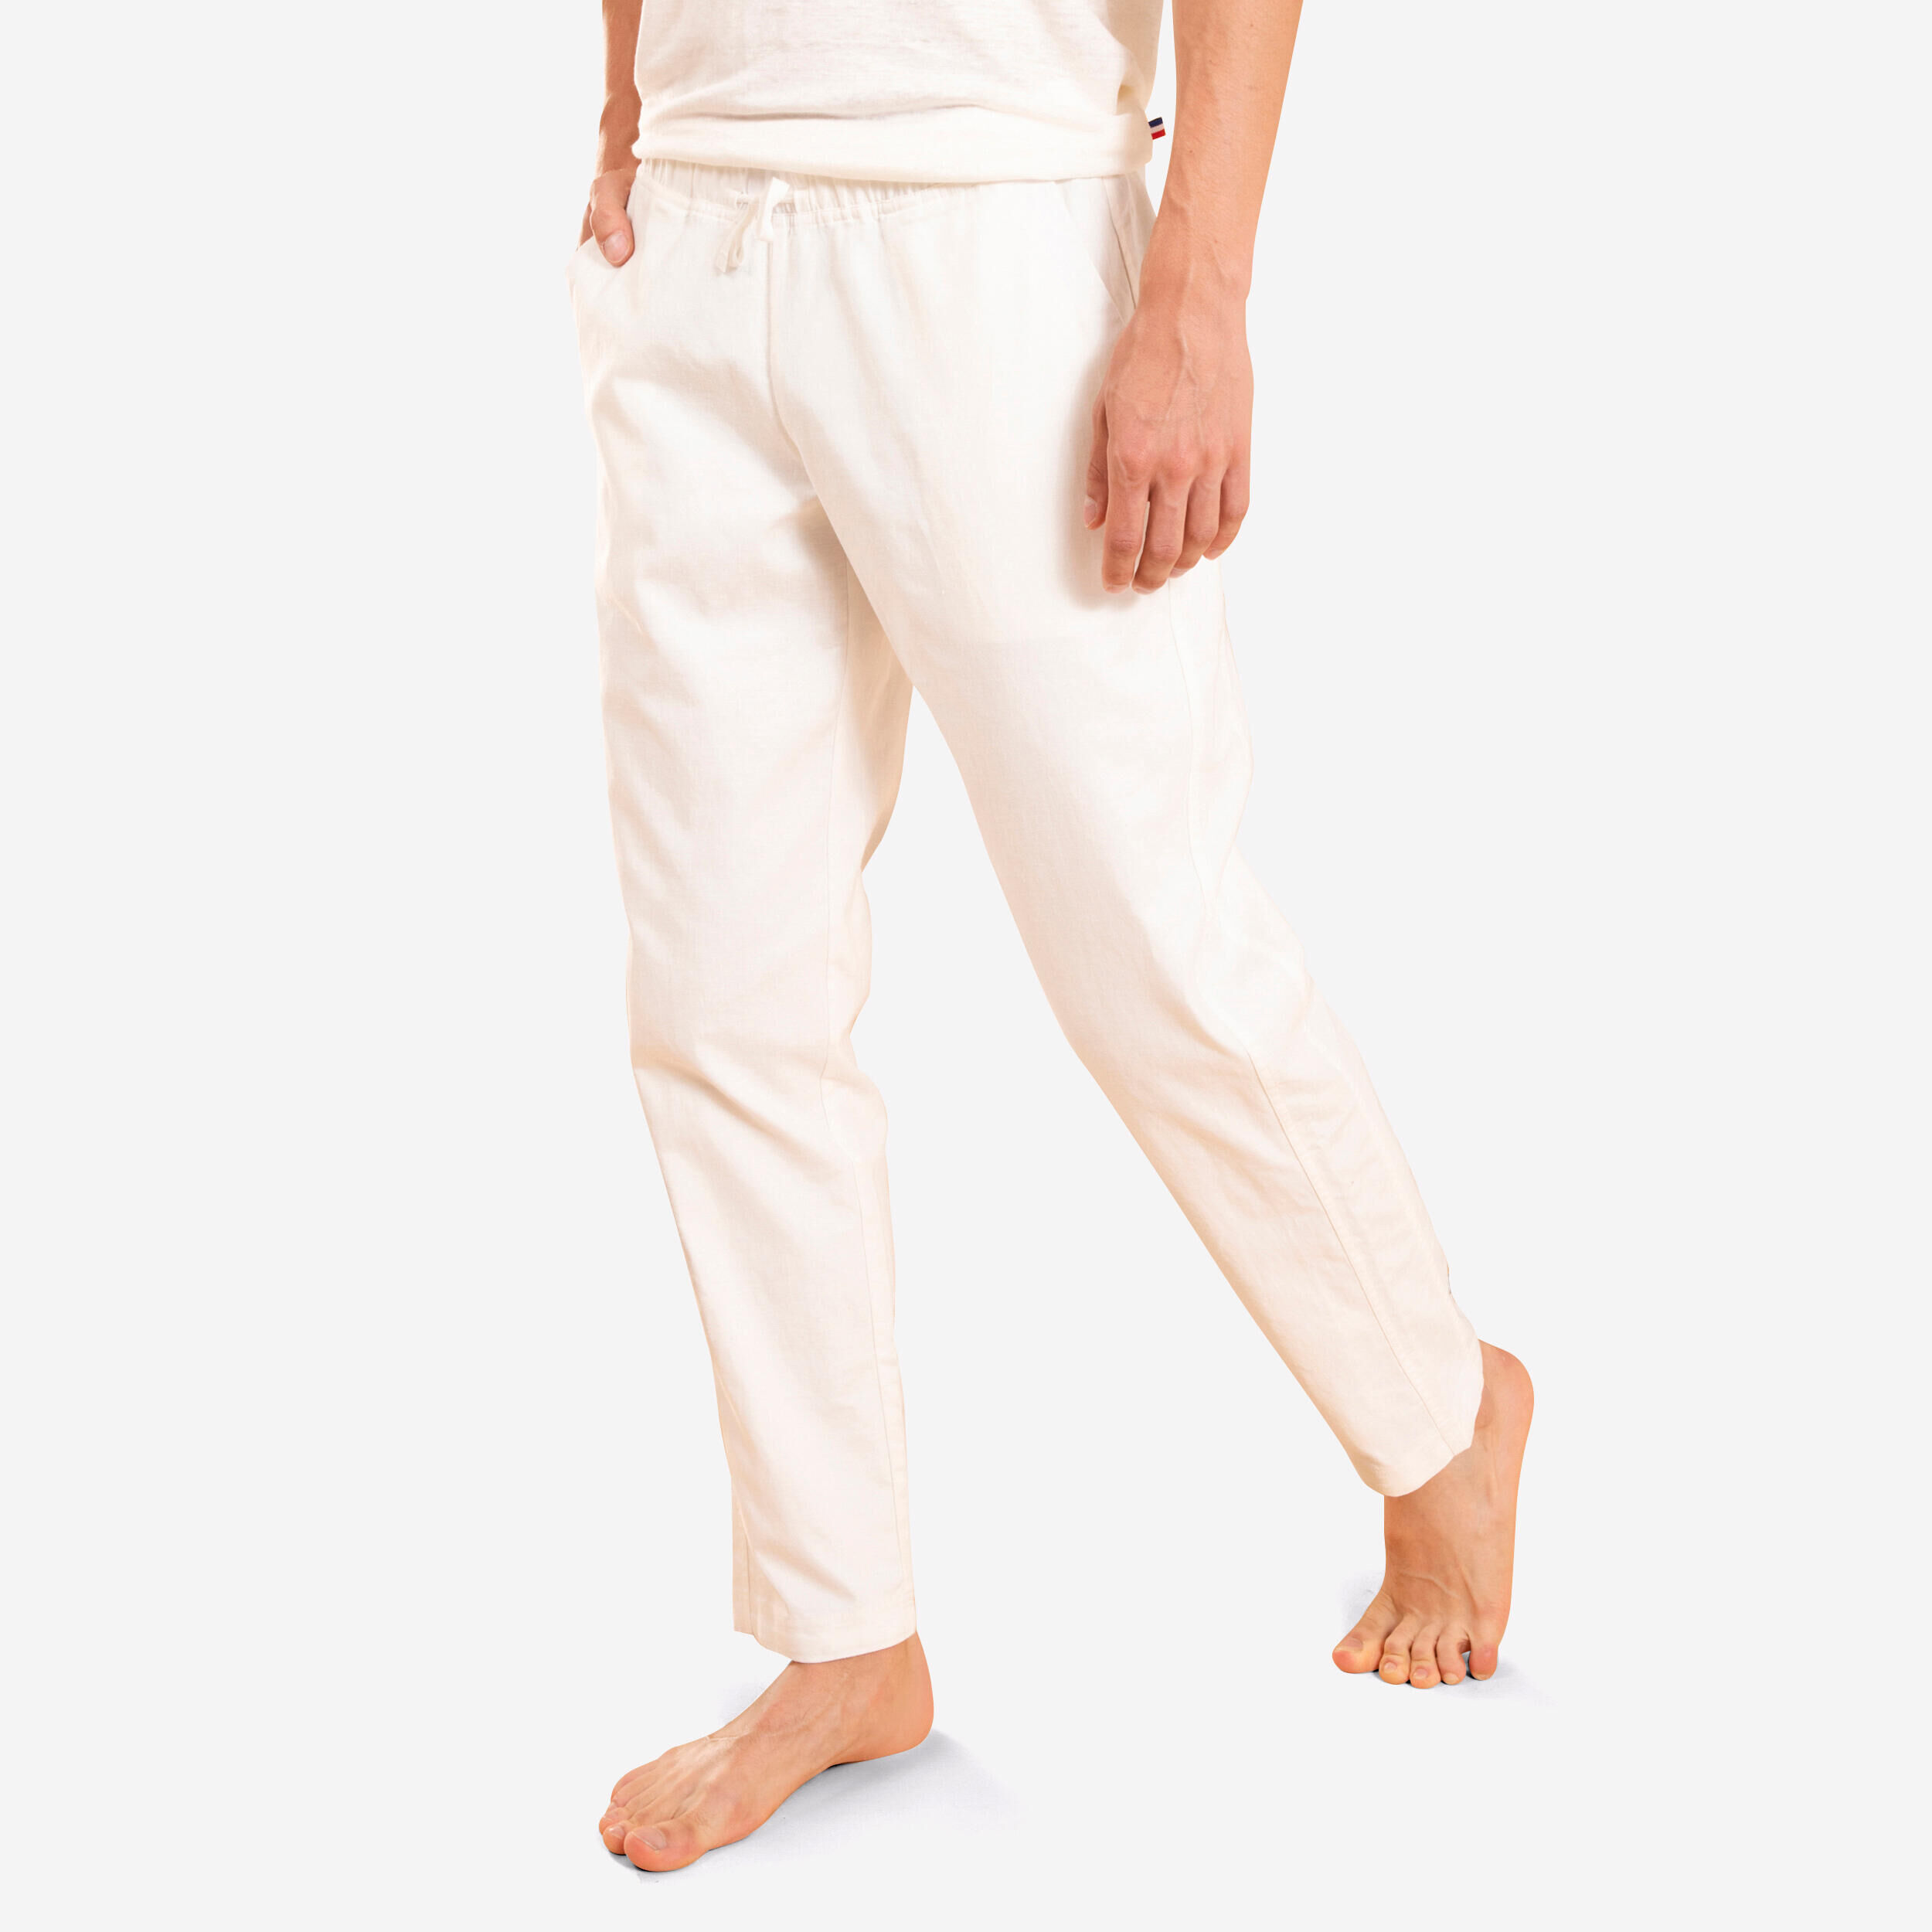 KIMJALY Men's Gentle Yoga Linen/Cotton Woven Bottoms - White